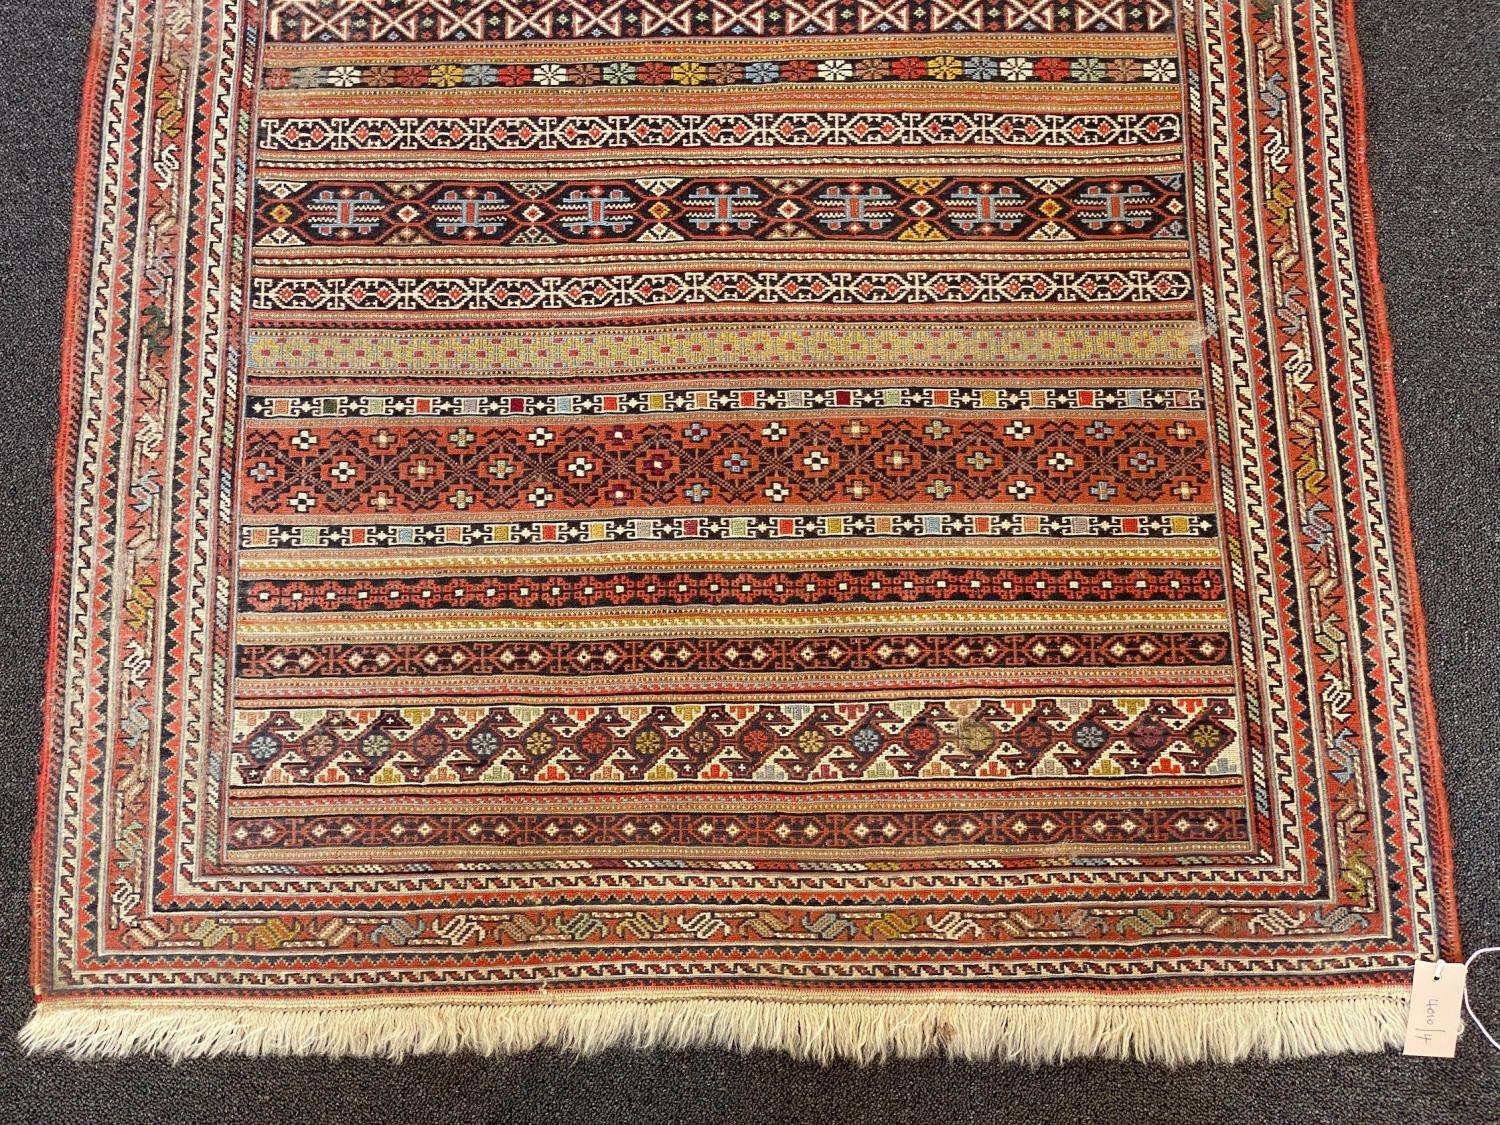 A fine Sumac flatweave polychrome rug 160 x 100 cms - Image 2 of 7